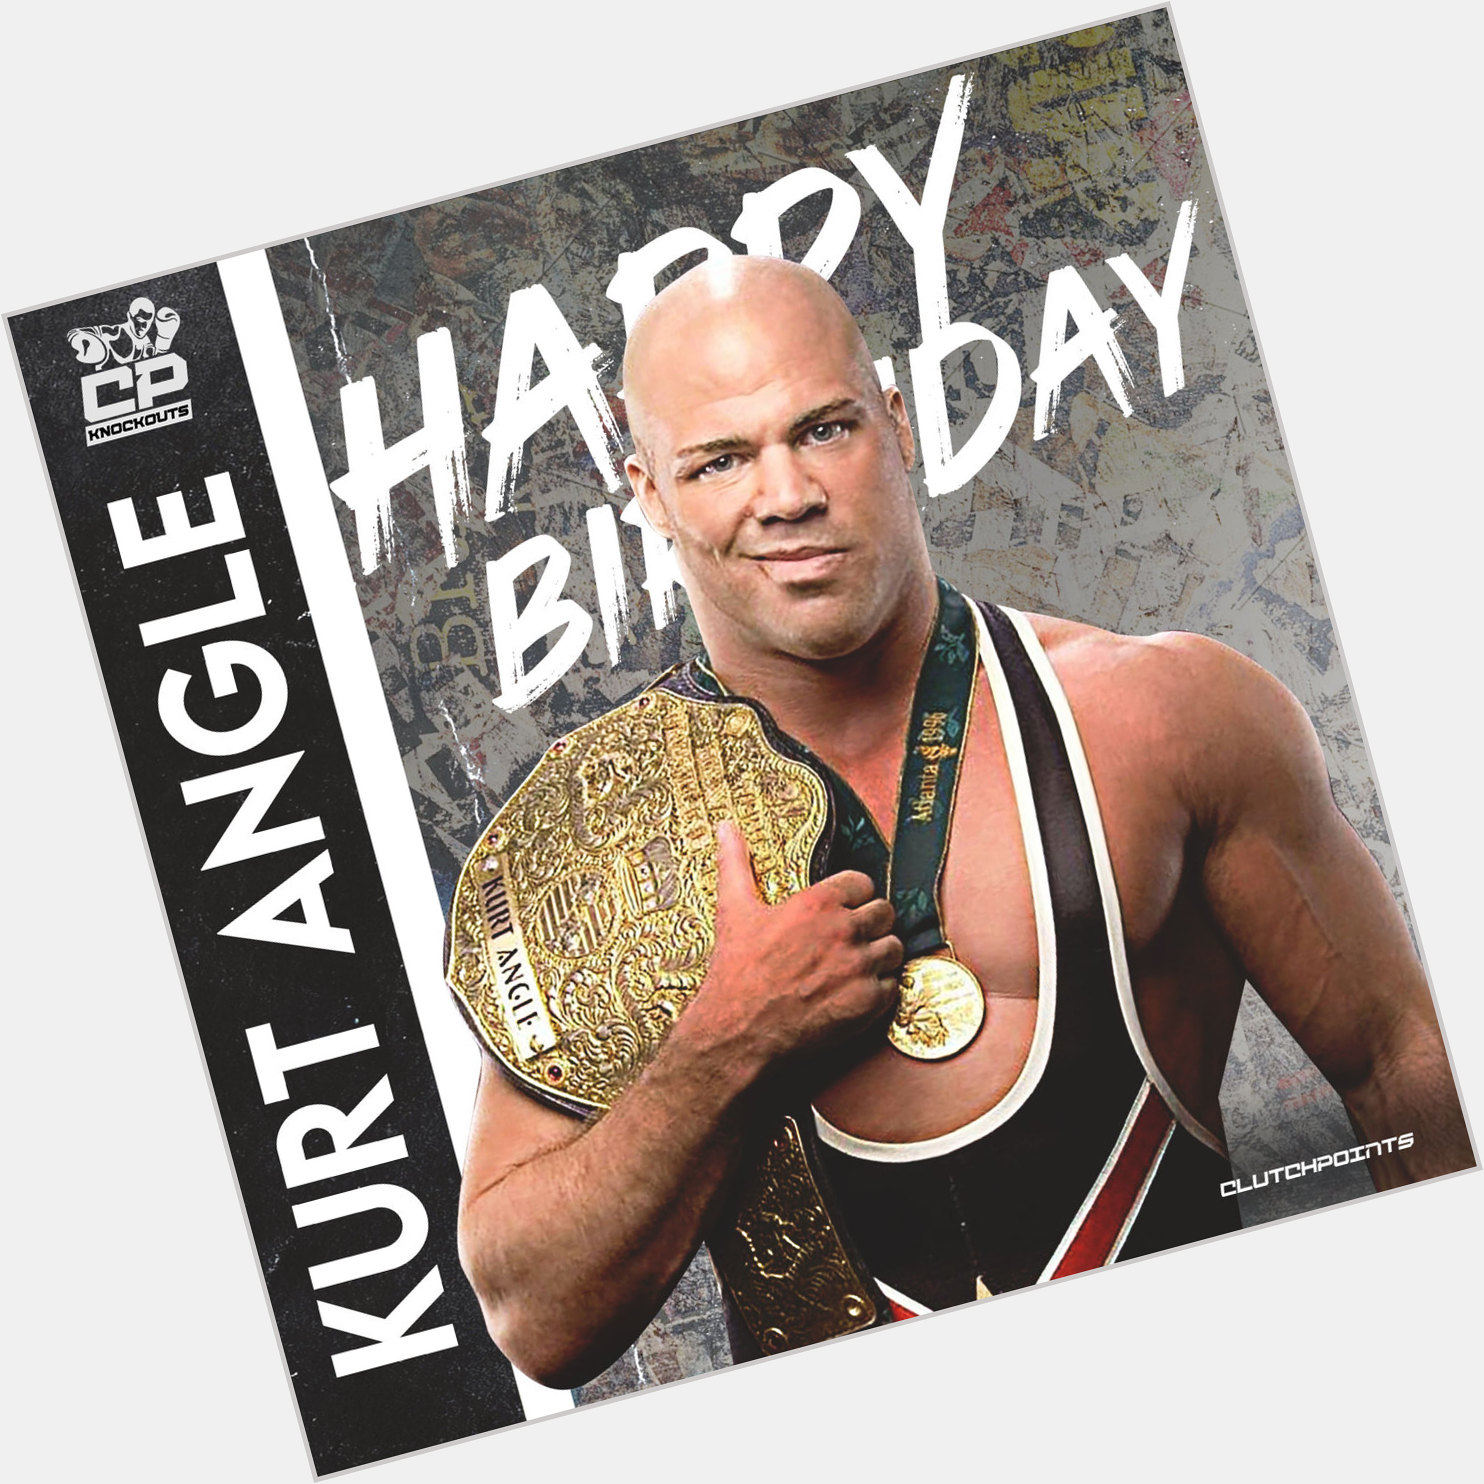 Let\s all wish Kurt Angle a happy 53rd birthday! 